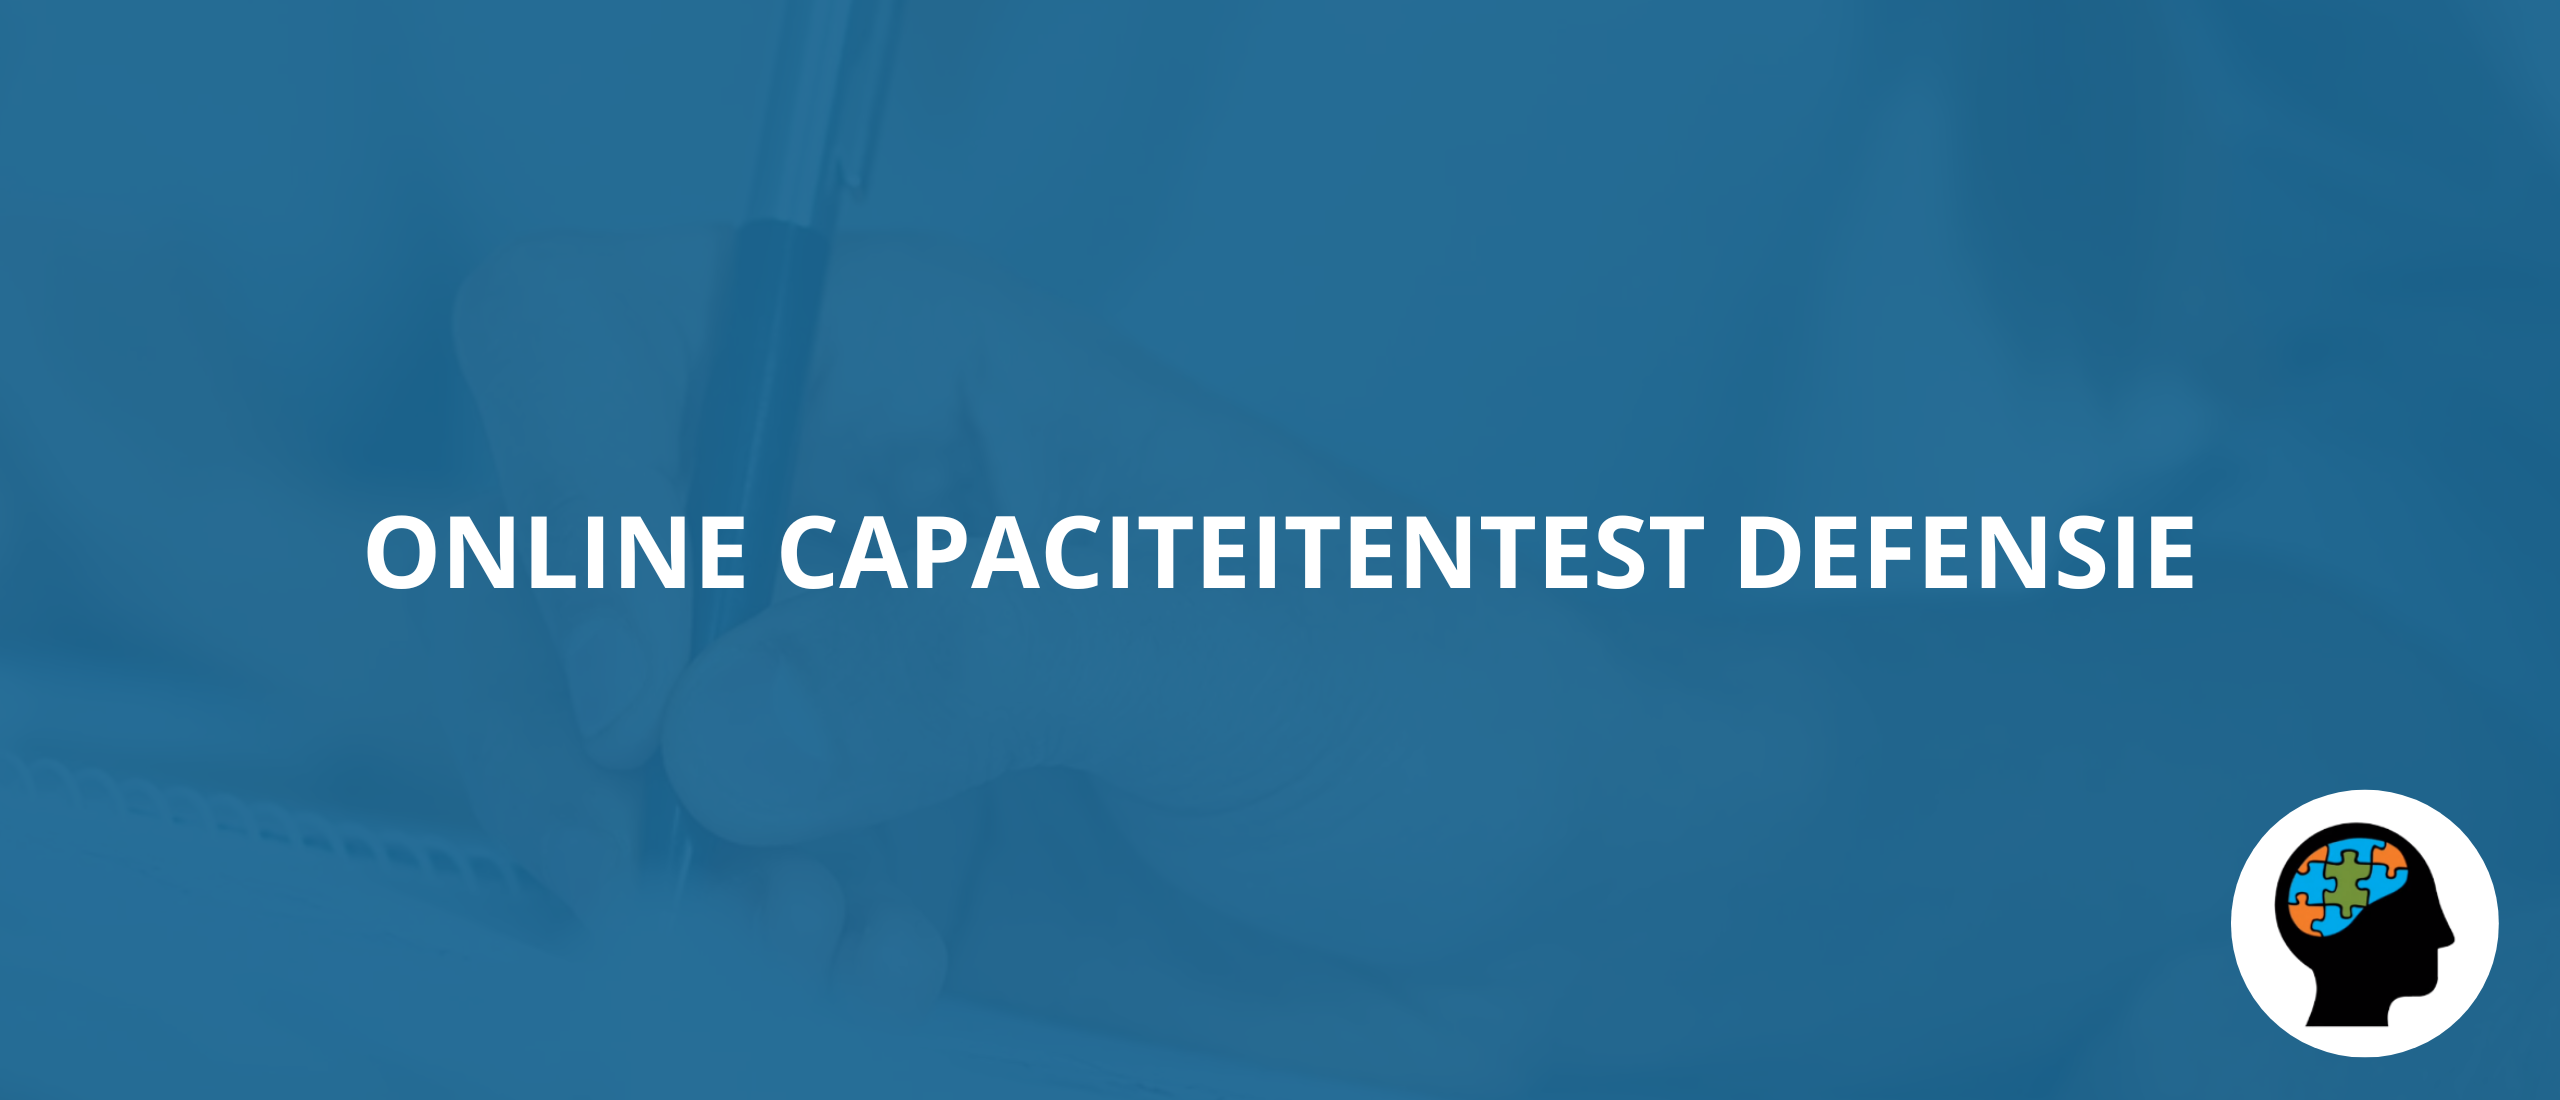 Online capaciteitentest defensie banner